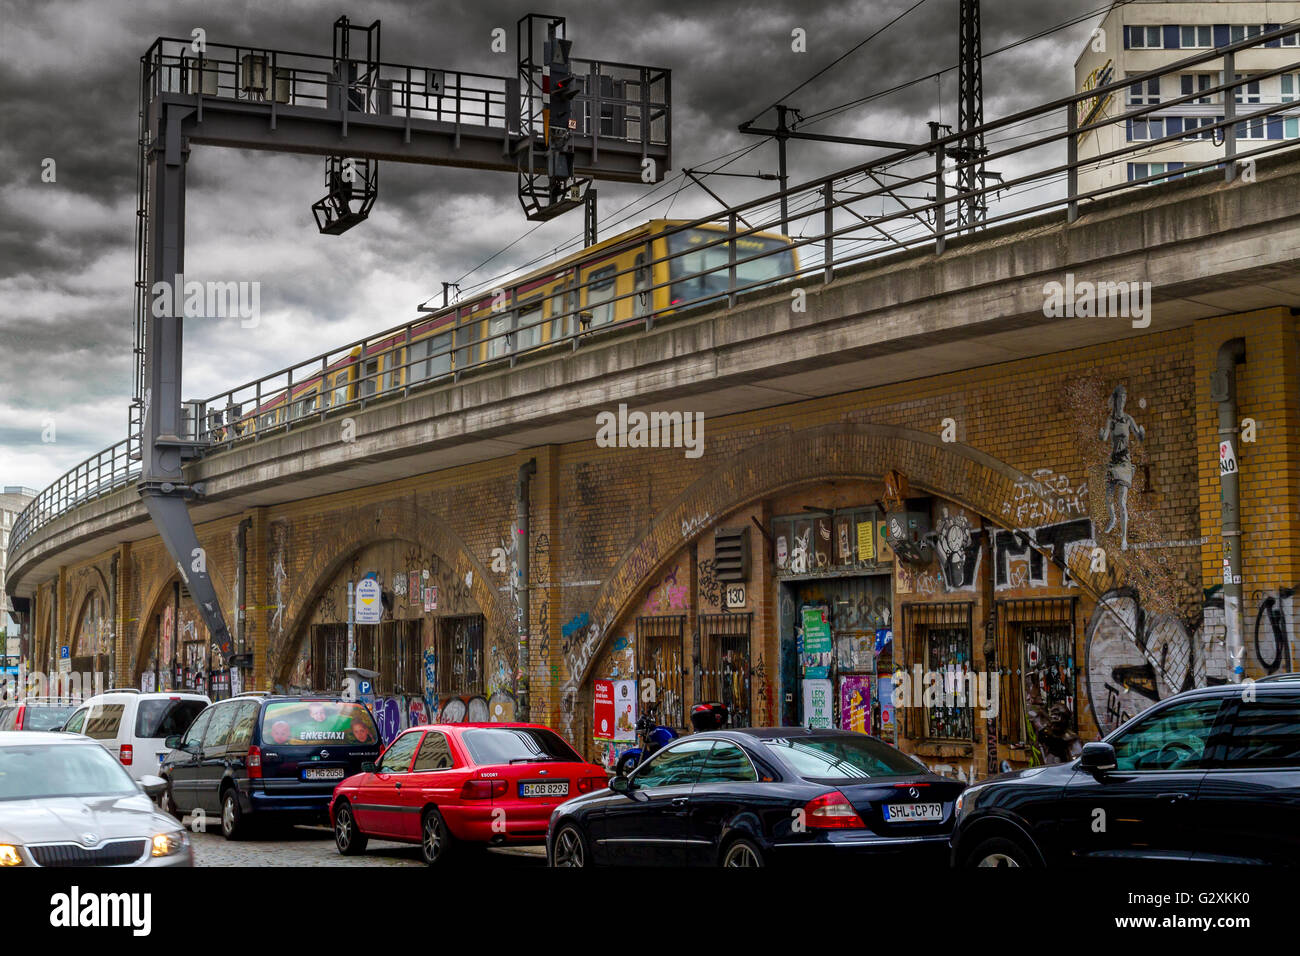 An S Bahn train on on a railway viaduct in Berlin, Germany Stock Photo